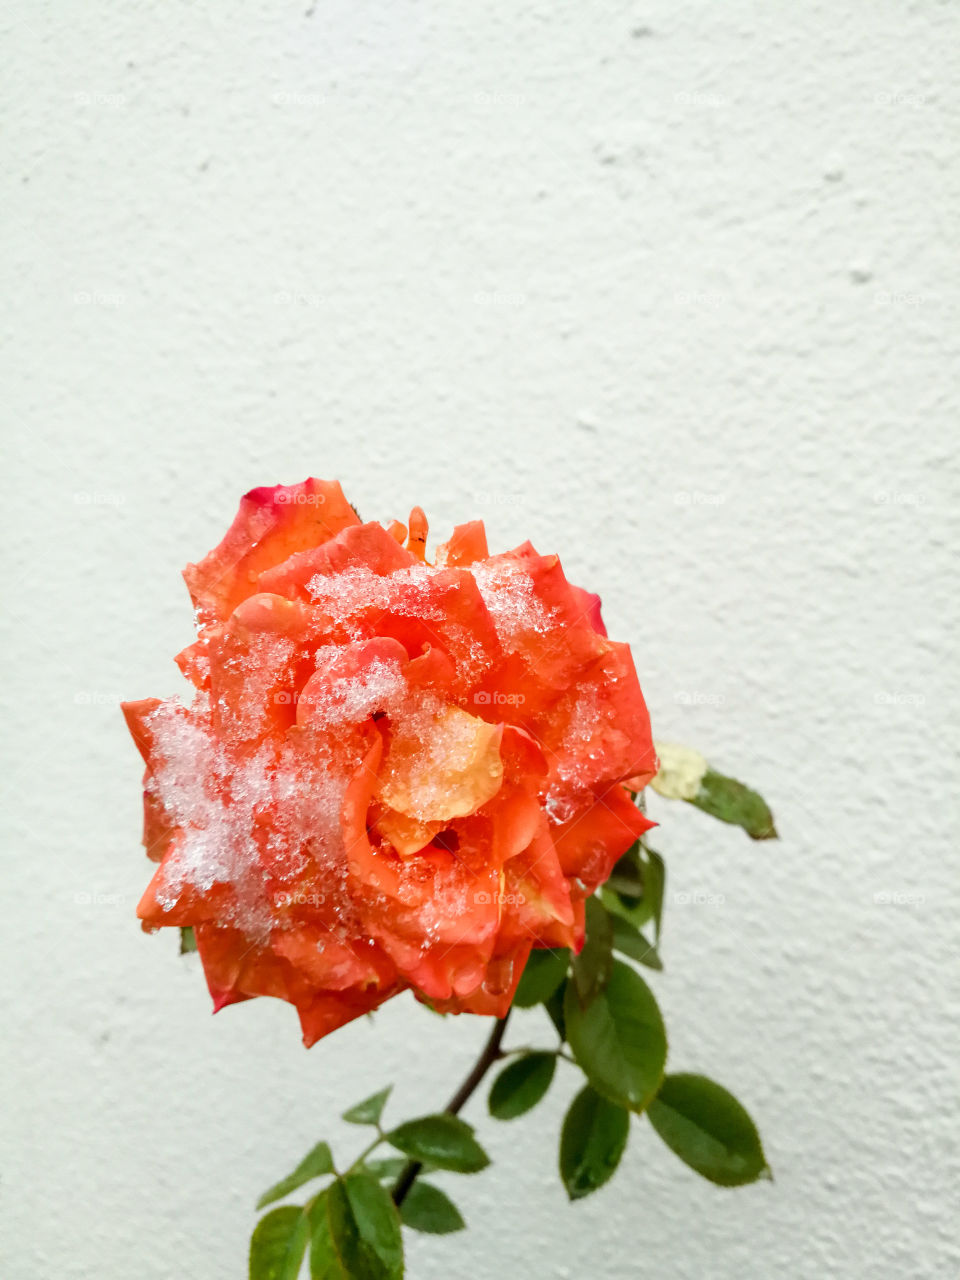 Роза под снегом